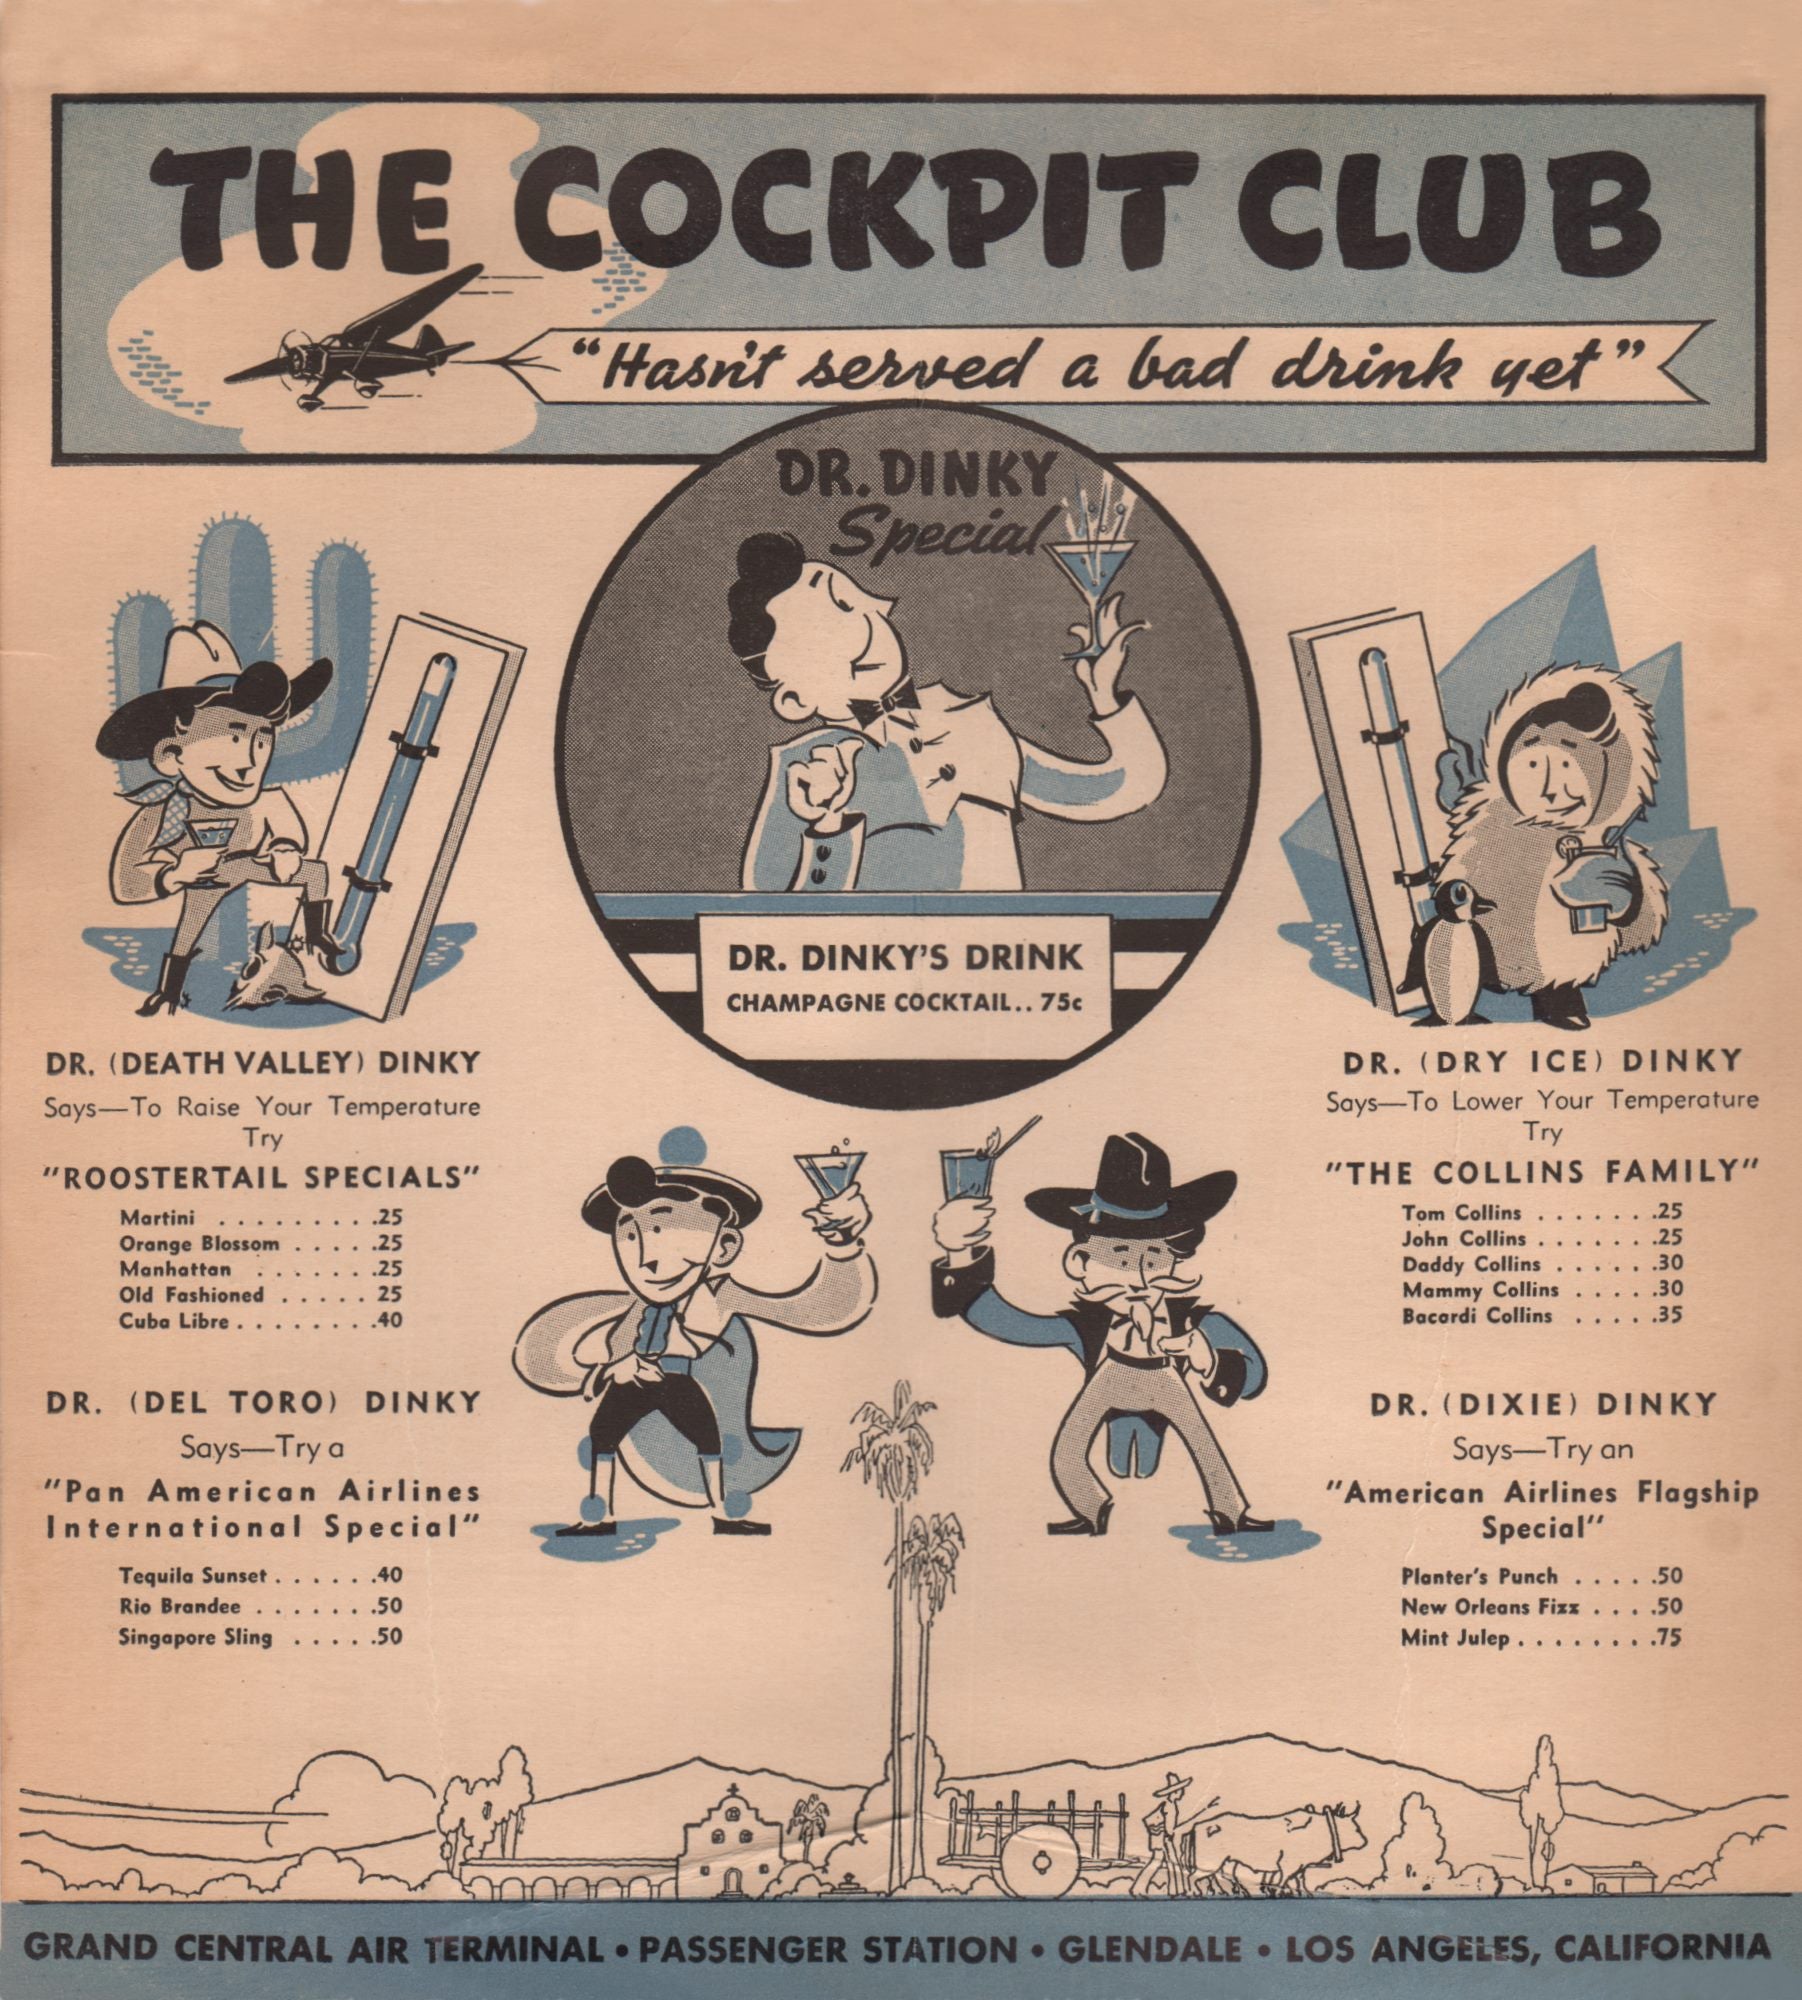  The Cockpit Club, Glendale Airport 1930s Cocktail Menu